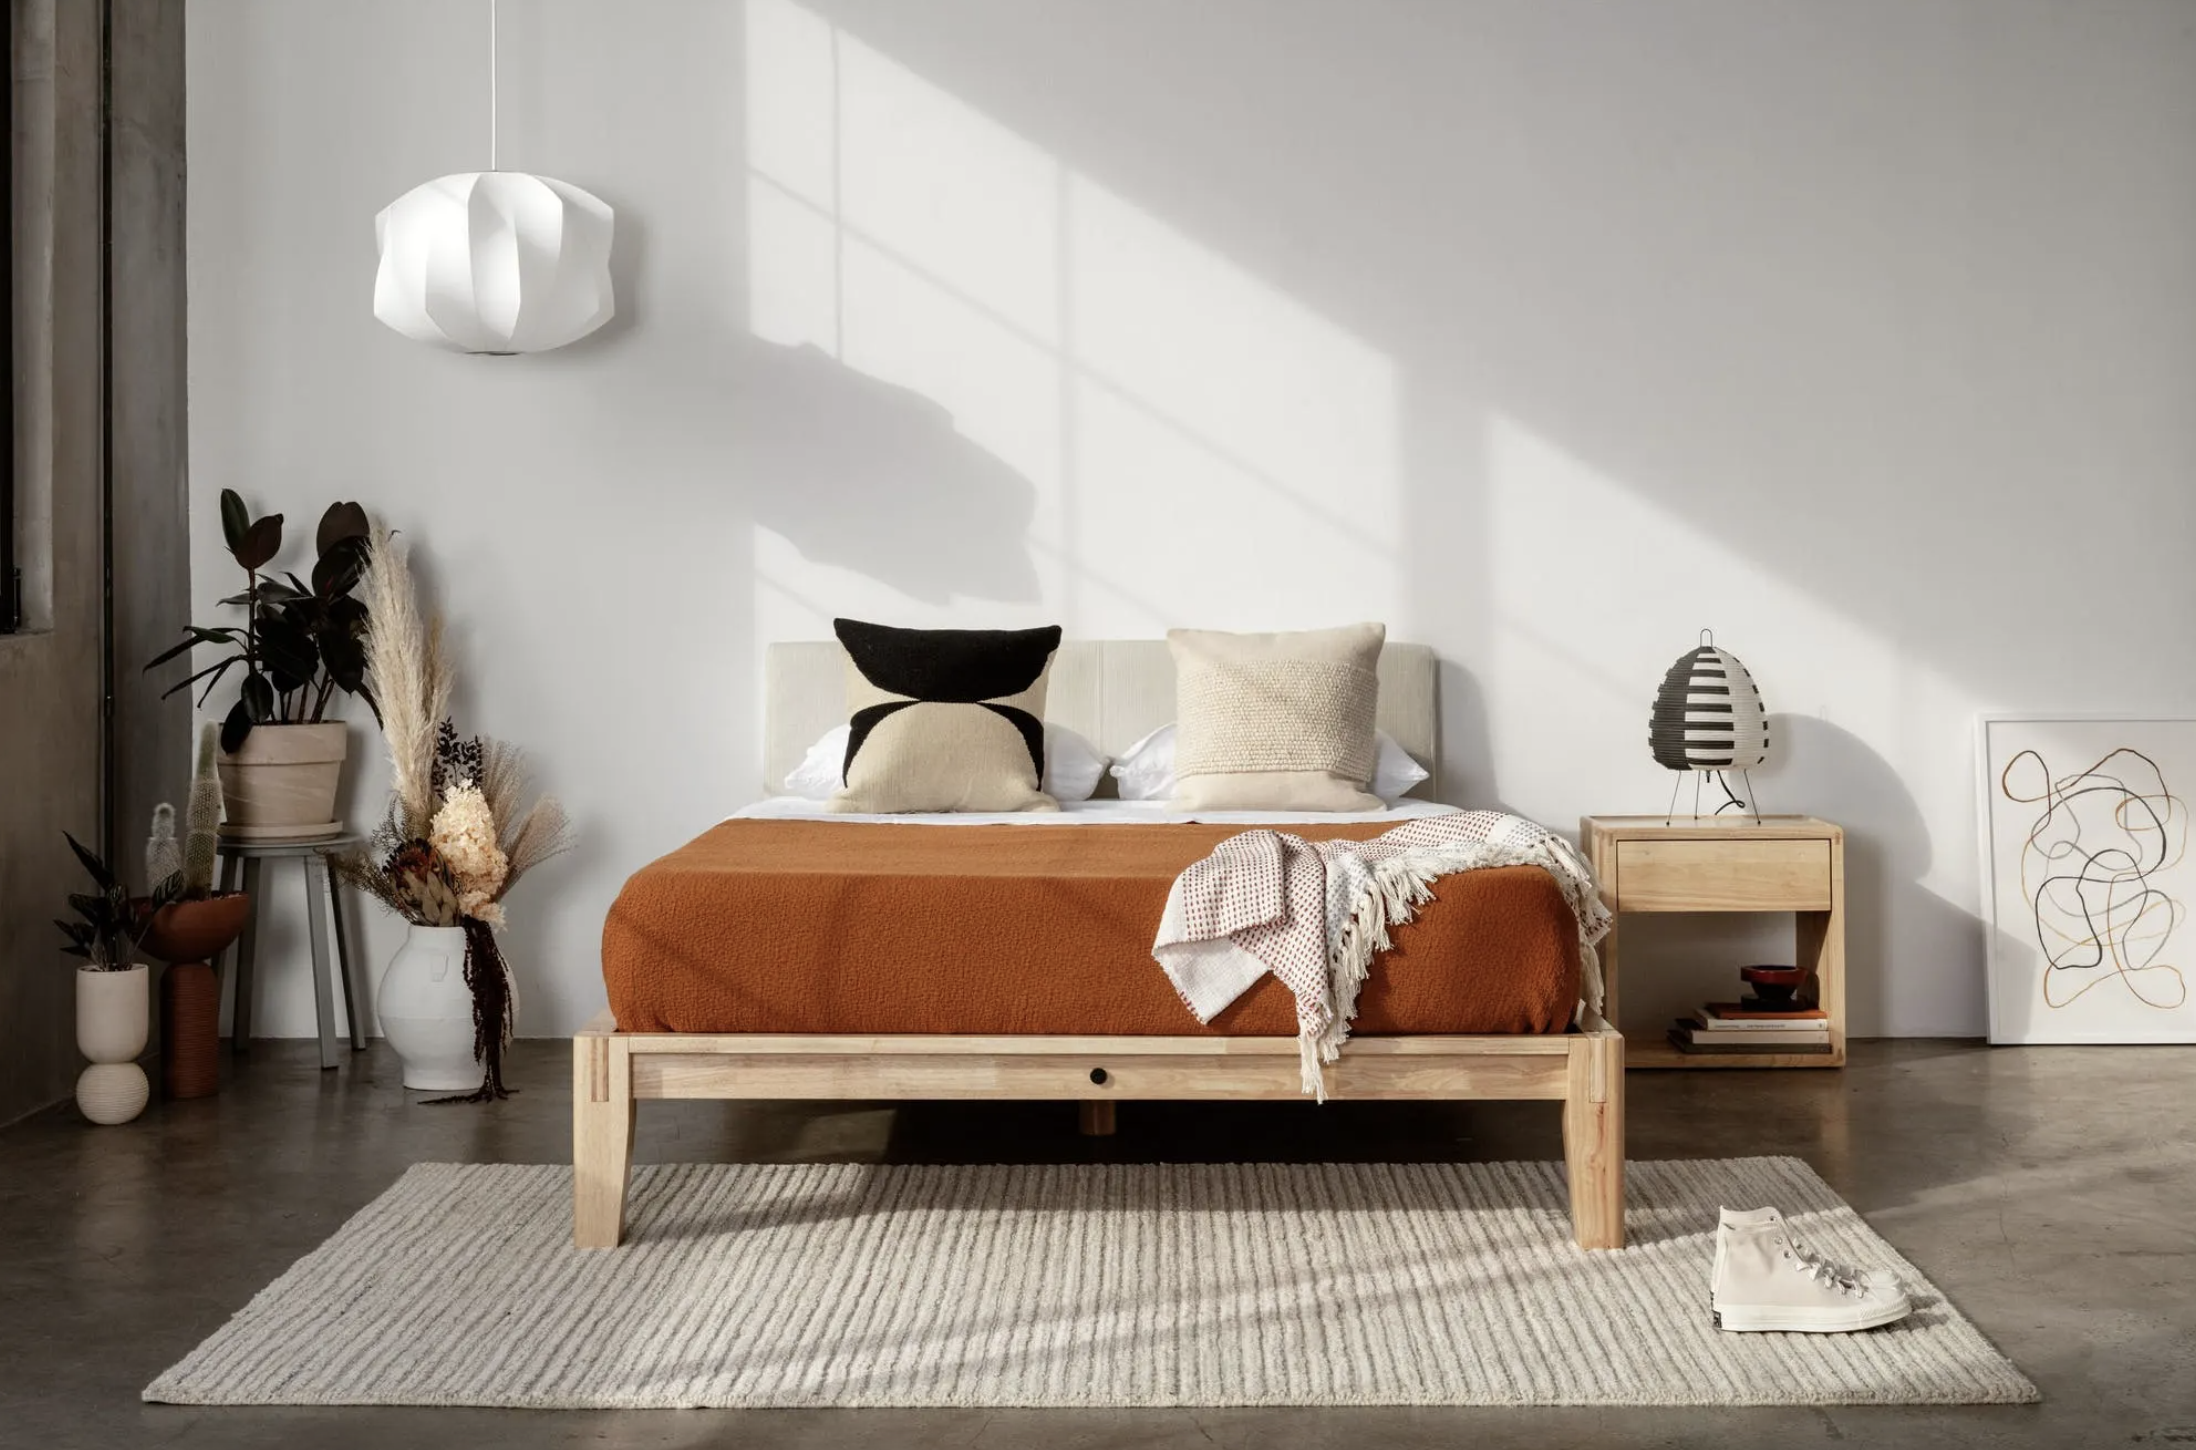 Solano King Wood Bed Headboard Cushion + Reviews